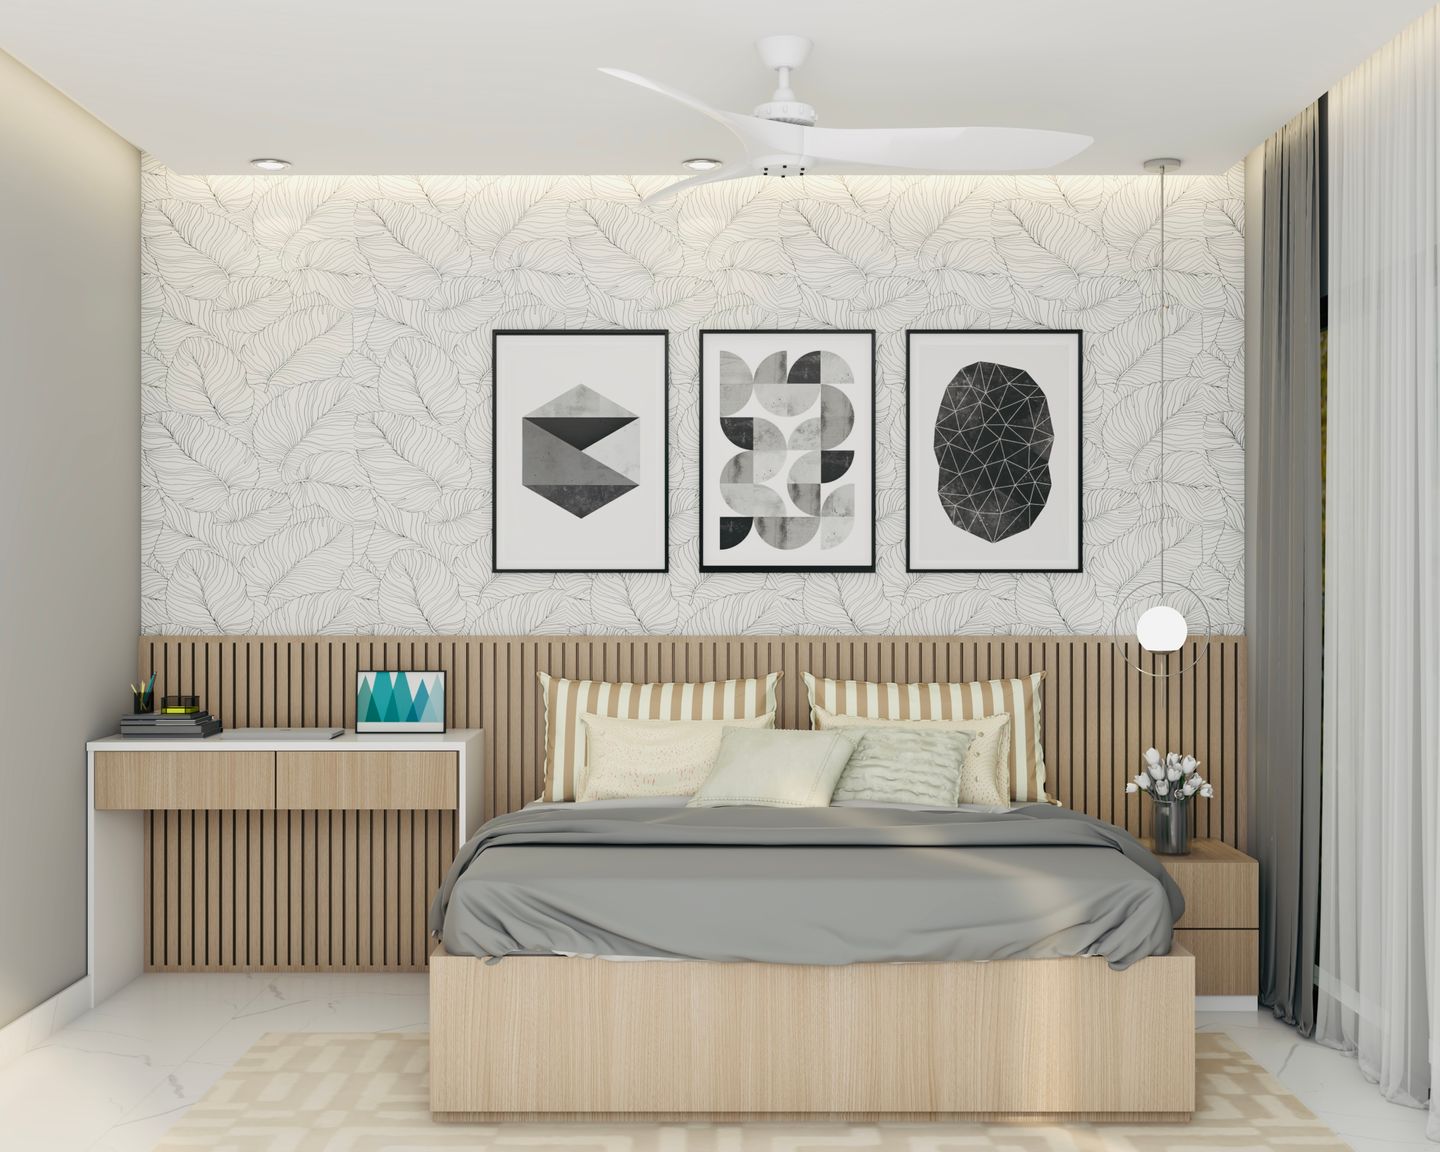 Compact Kid's Bedroom Design With Wooden Panels - Livspace